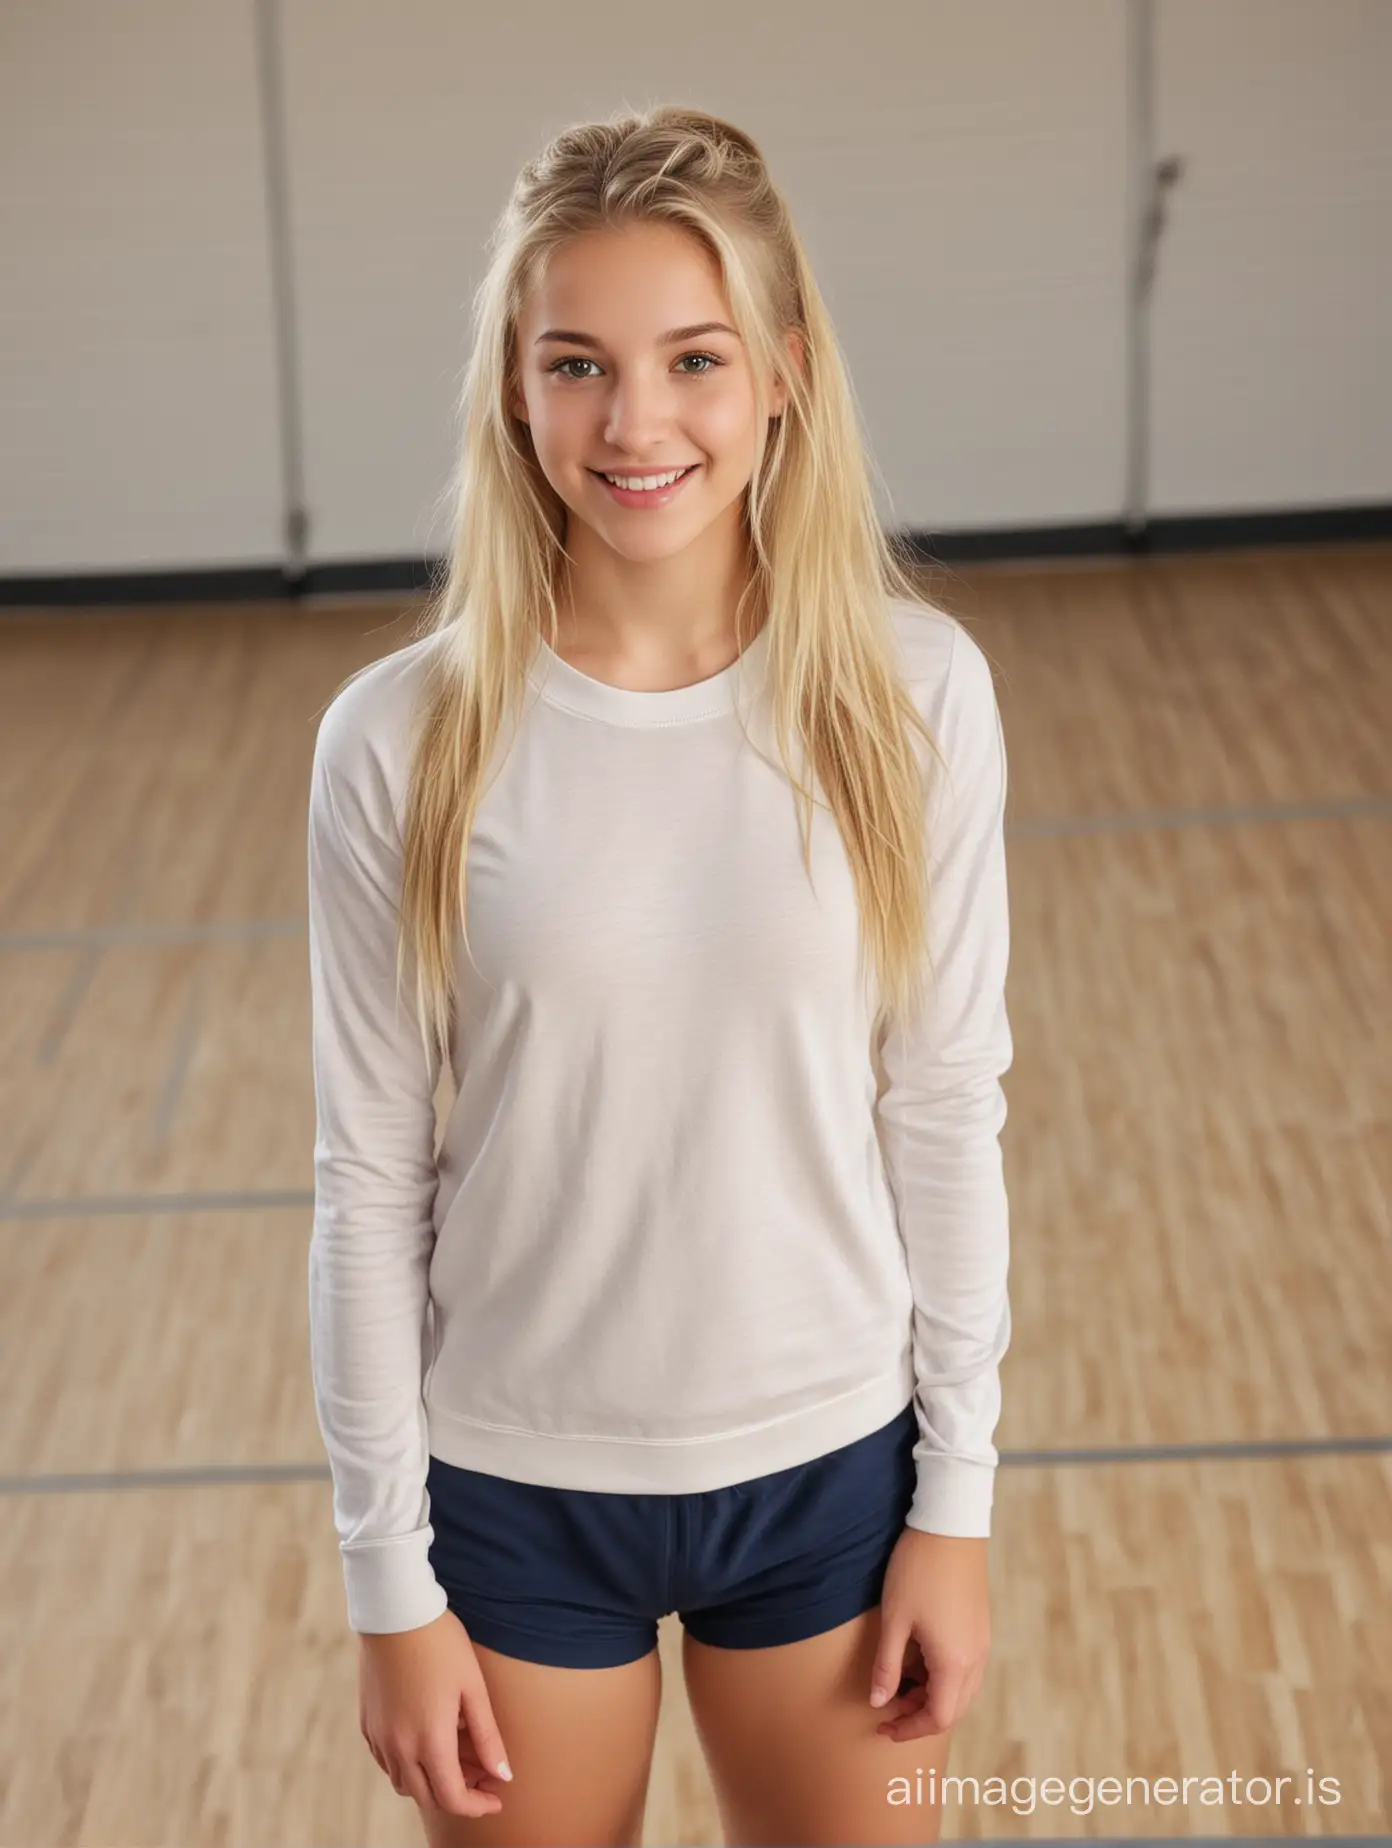 Very cute sixteen years old blonde girl in school gym class